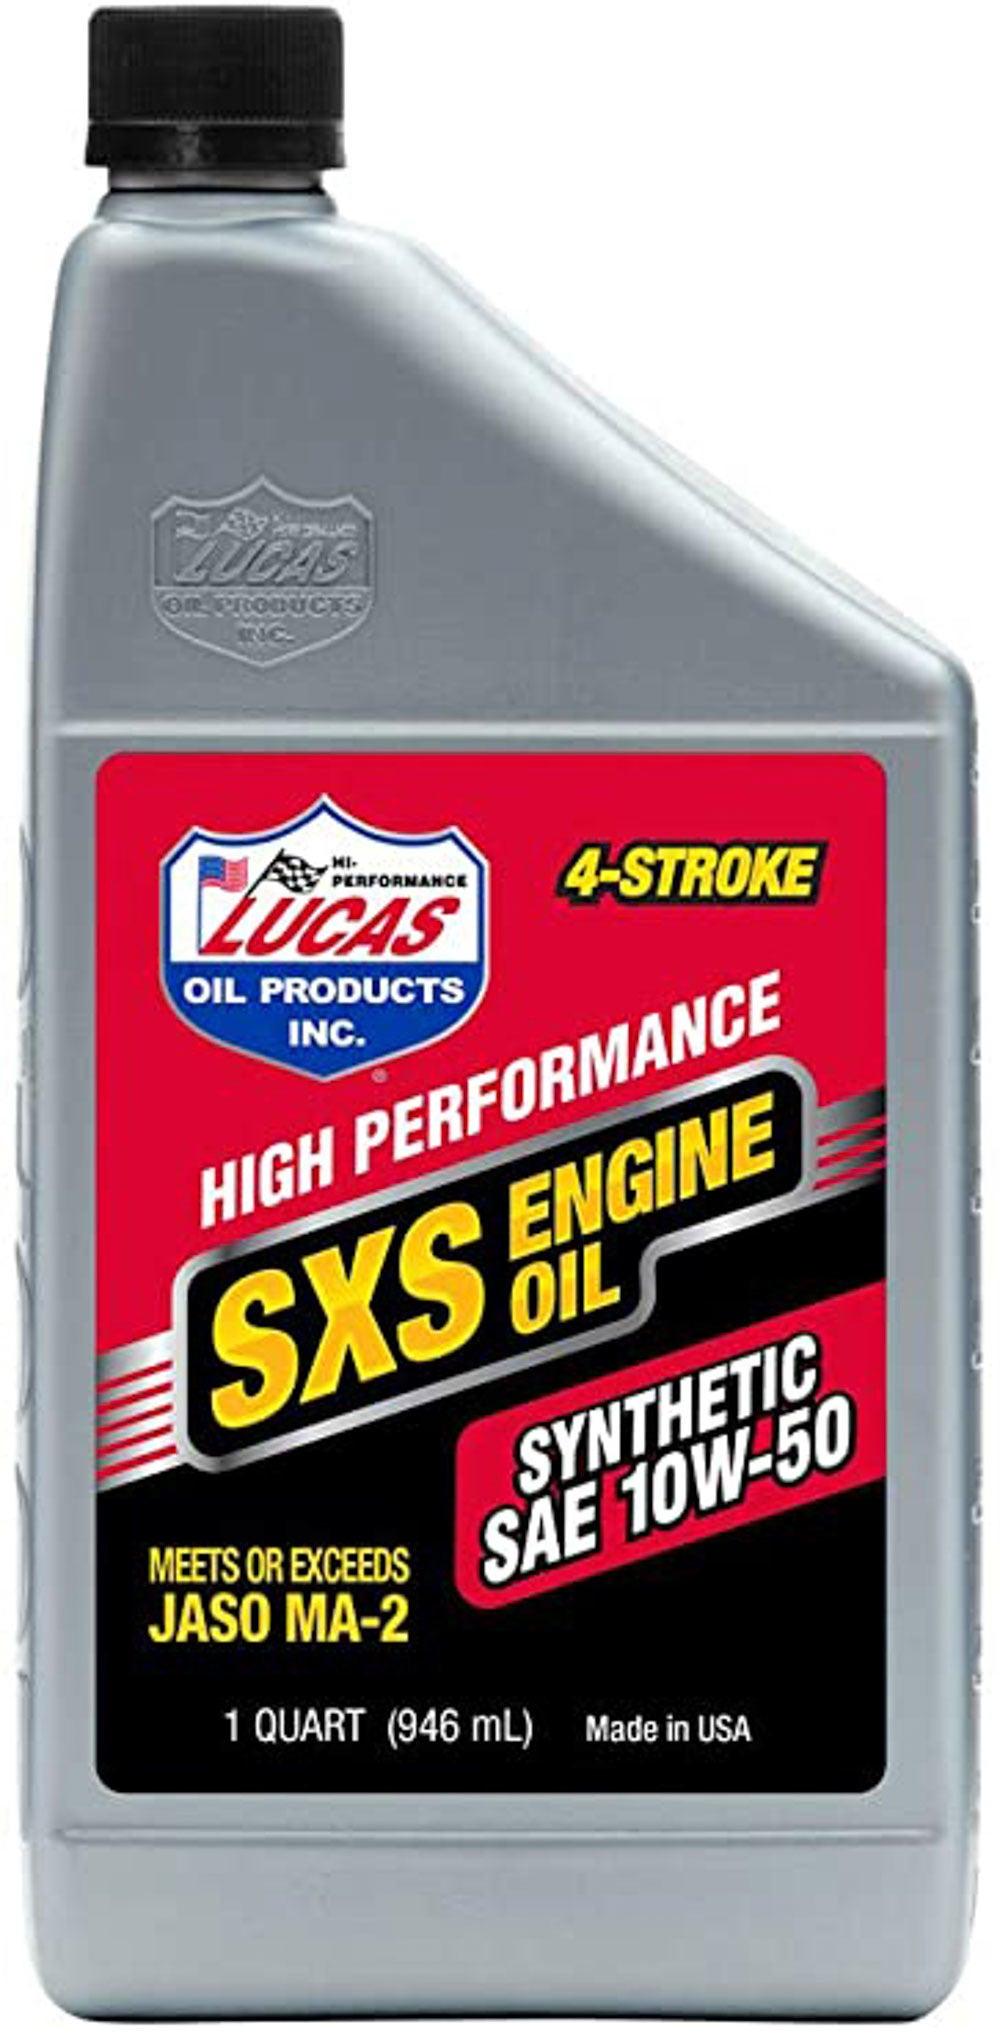 Synthetic 10w50 SXS Oil 1 Quart - Burlile Performance Products